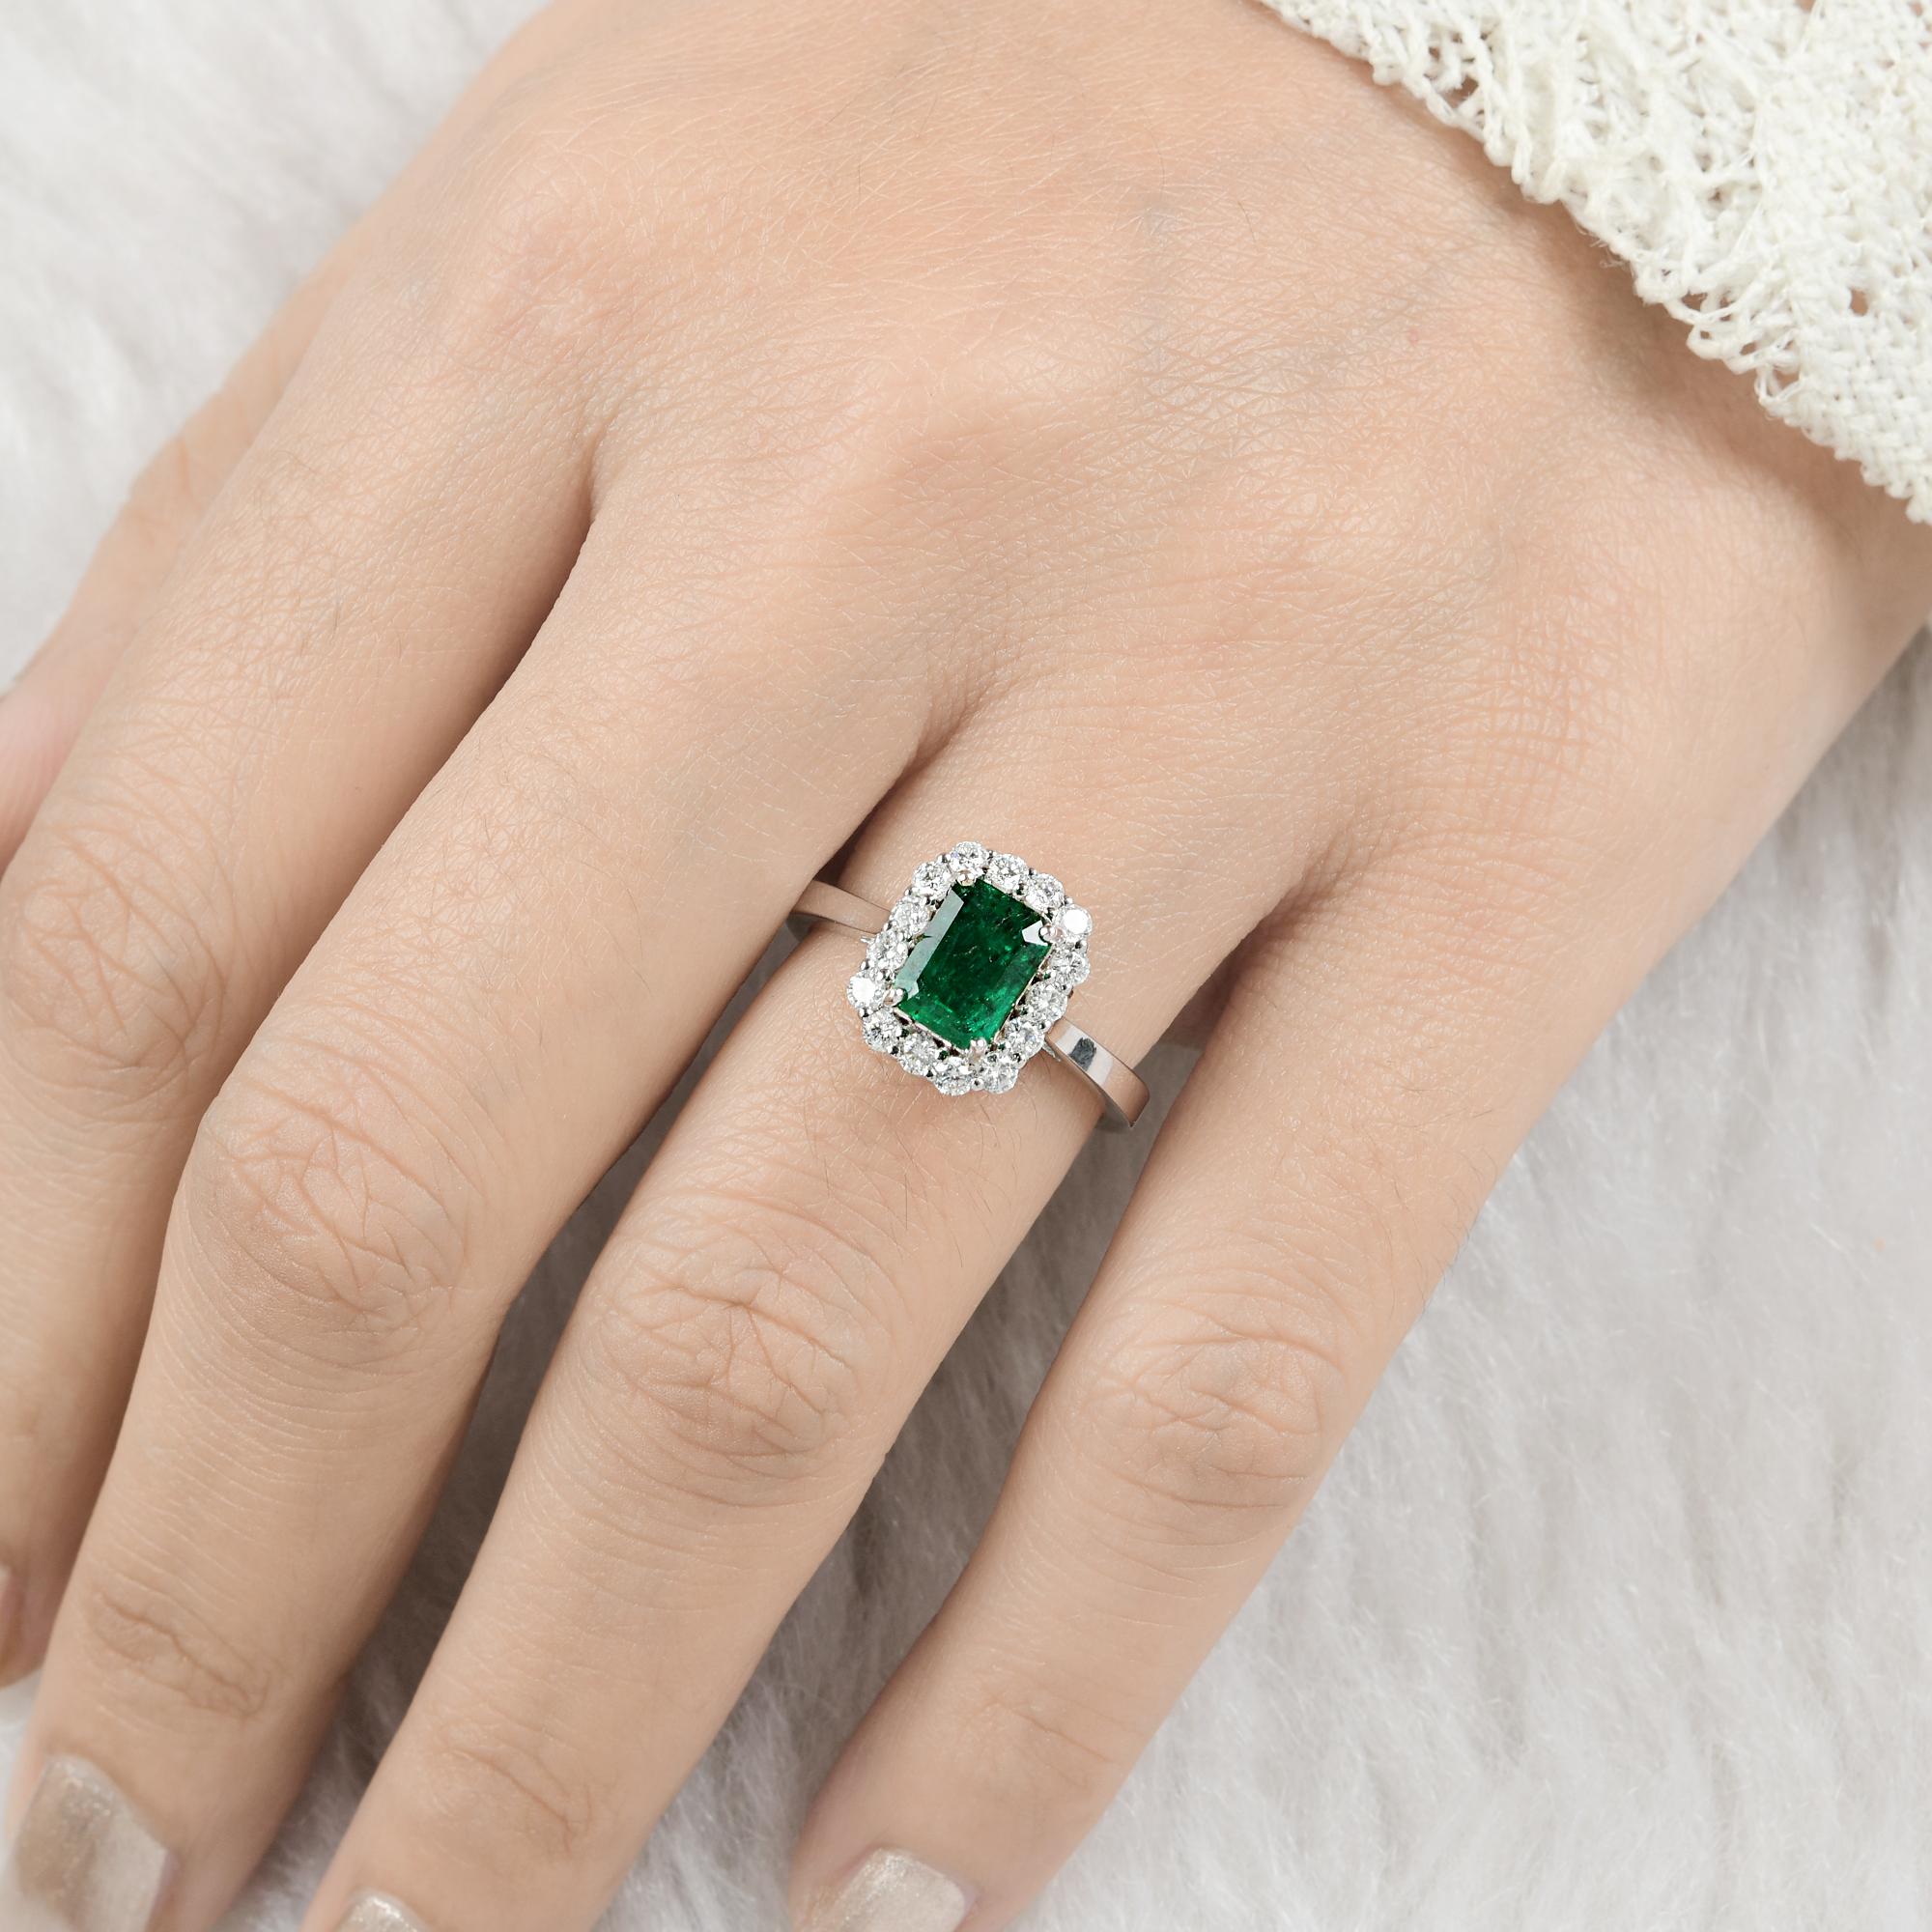 Emerald Cut Emerald Gemstone Cocktail Ring Diamond 14 Karat White Gold Handmade Fine Jewelry For Sale